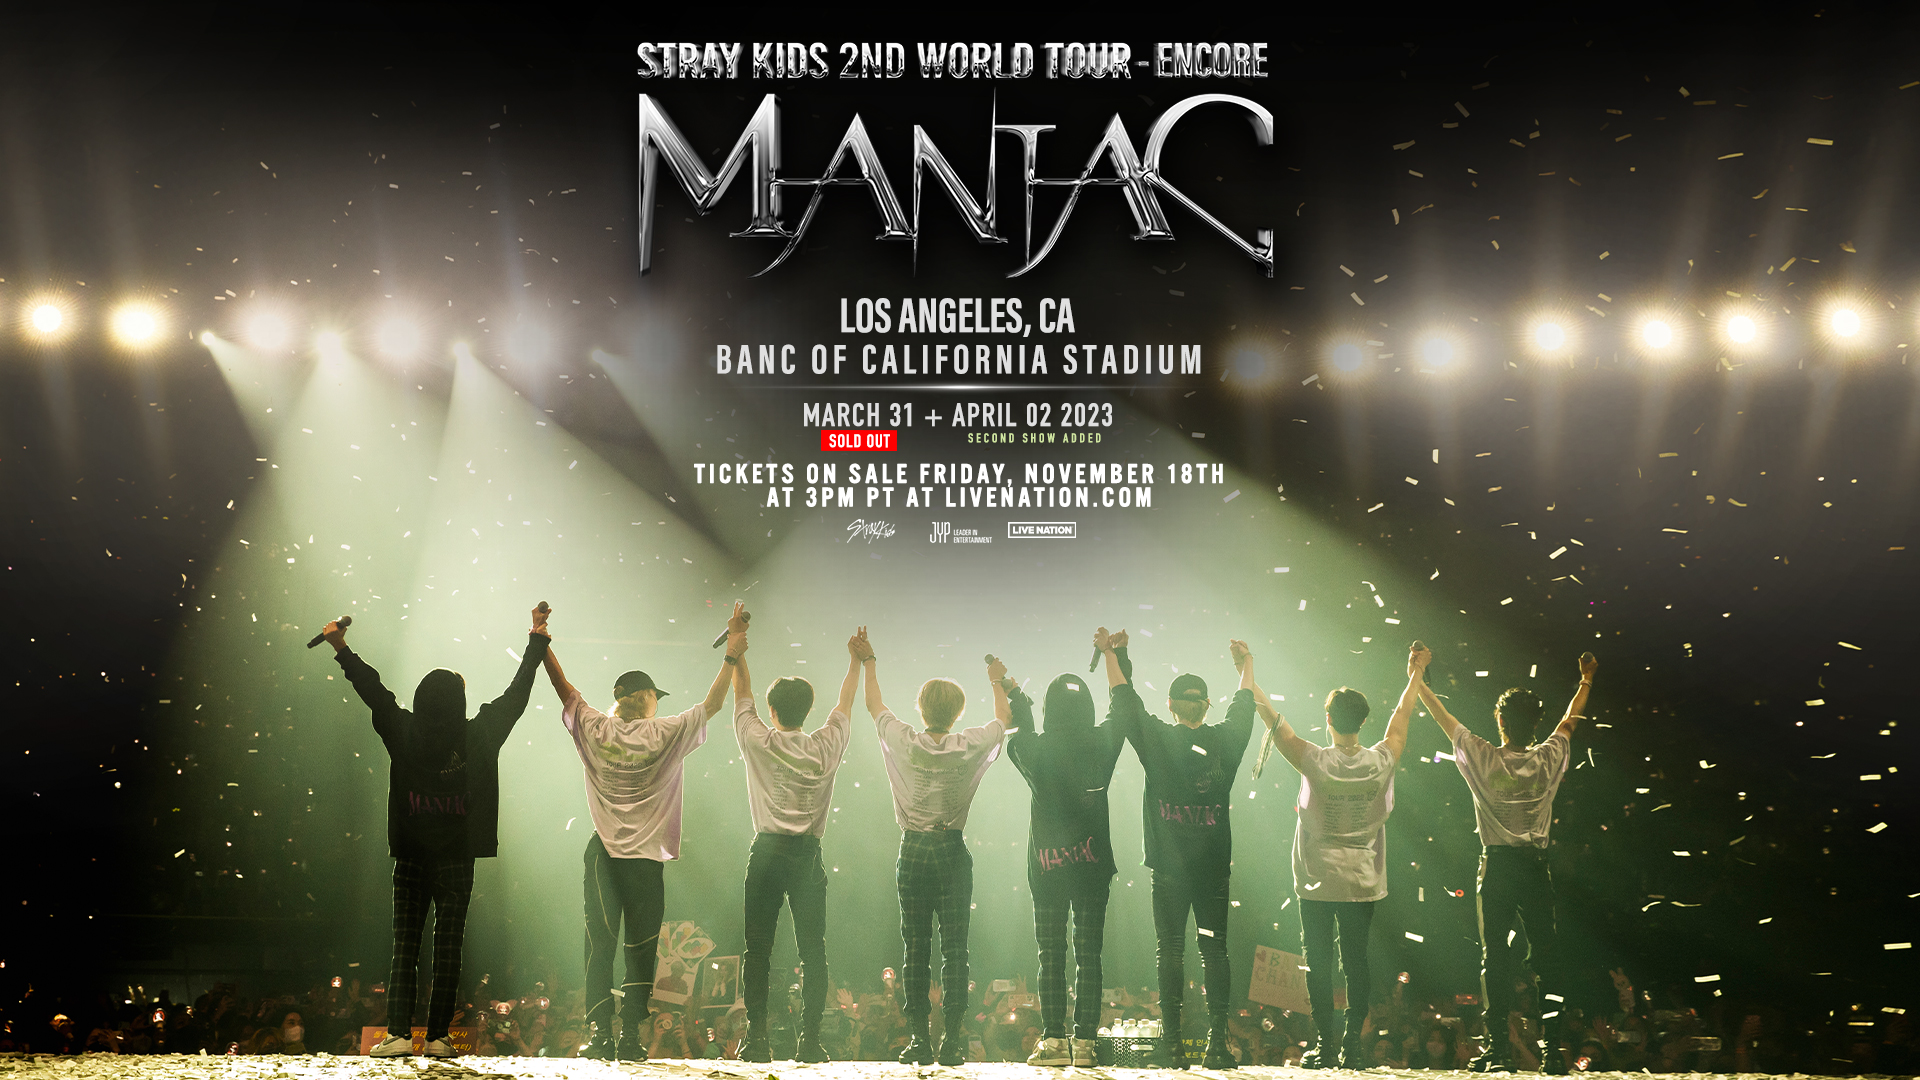 DUE TO INCREDIBLE DEMAND, K POP STARS STRAY KIDS ADD SECOND STADIUM PERFORMANCE IN LA ON 2ND WORLD TOUR “MANIAC”. BMO Stadium